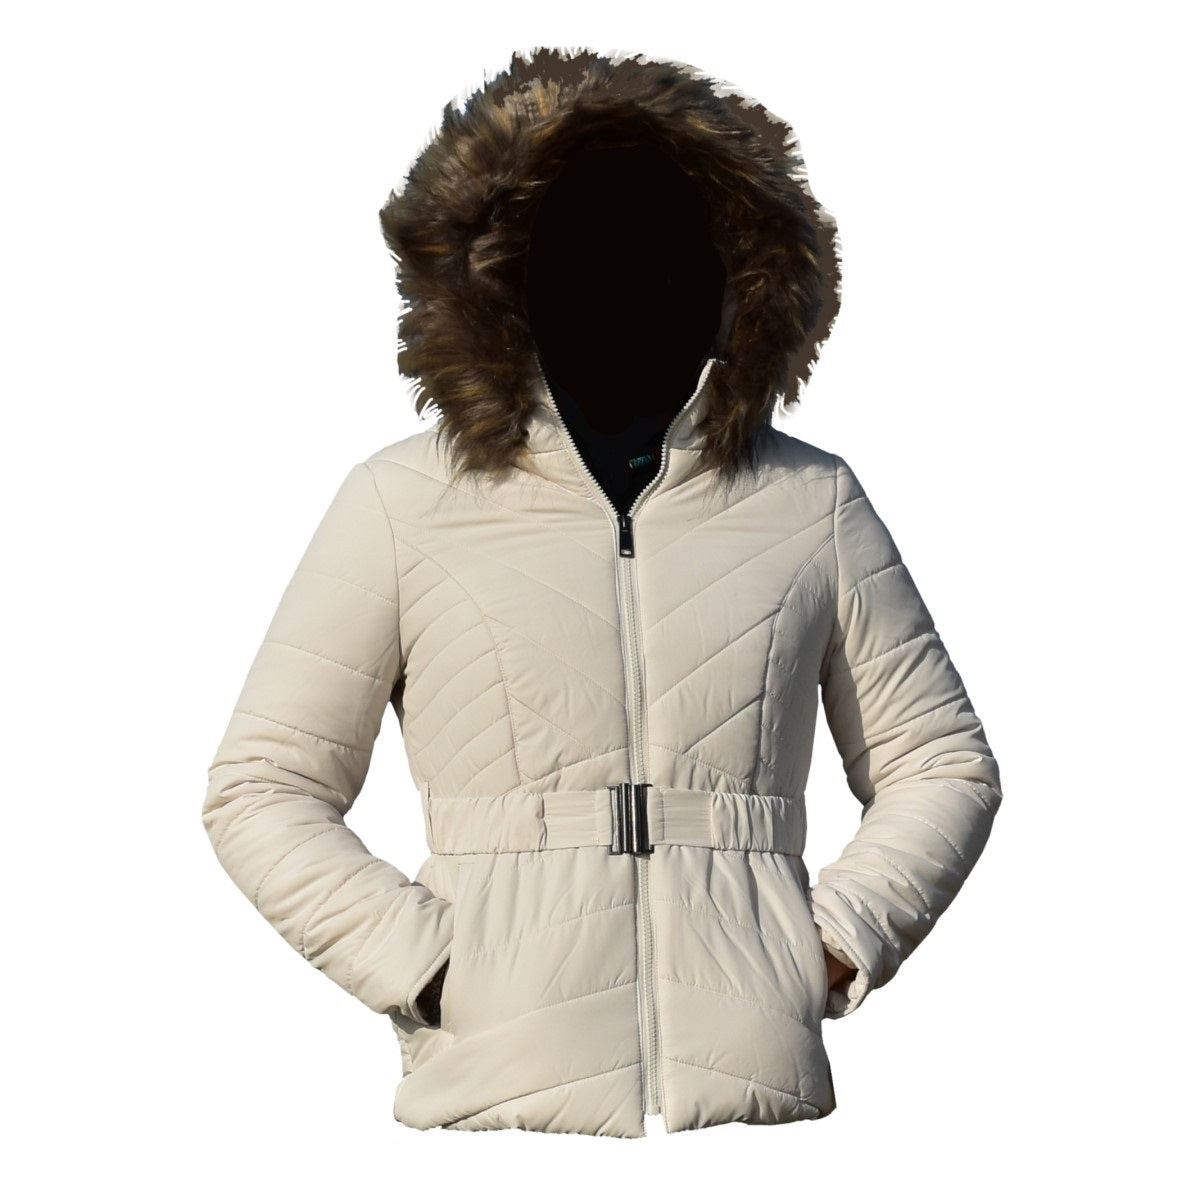 Chamarra para Mujer - TM-6117B Jacket for Women